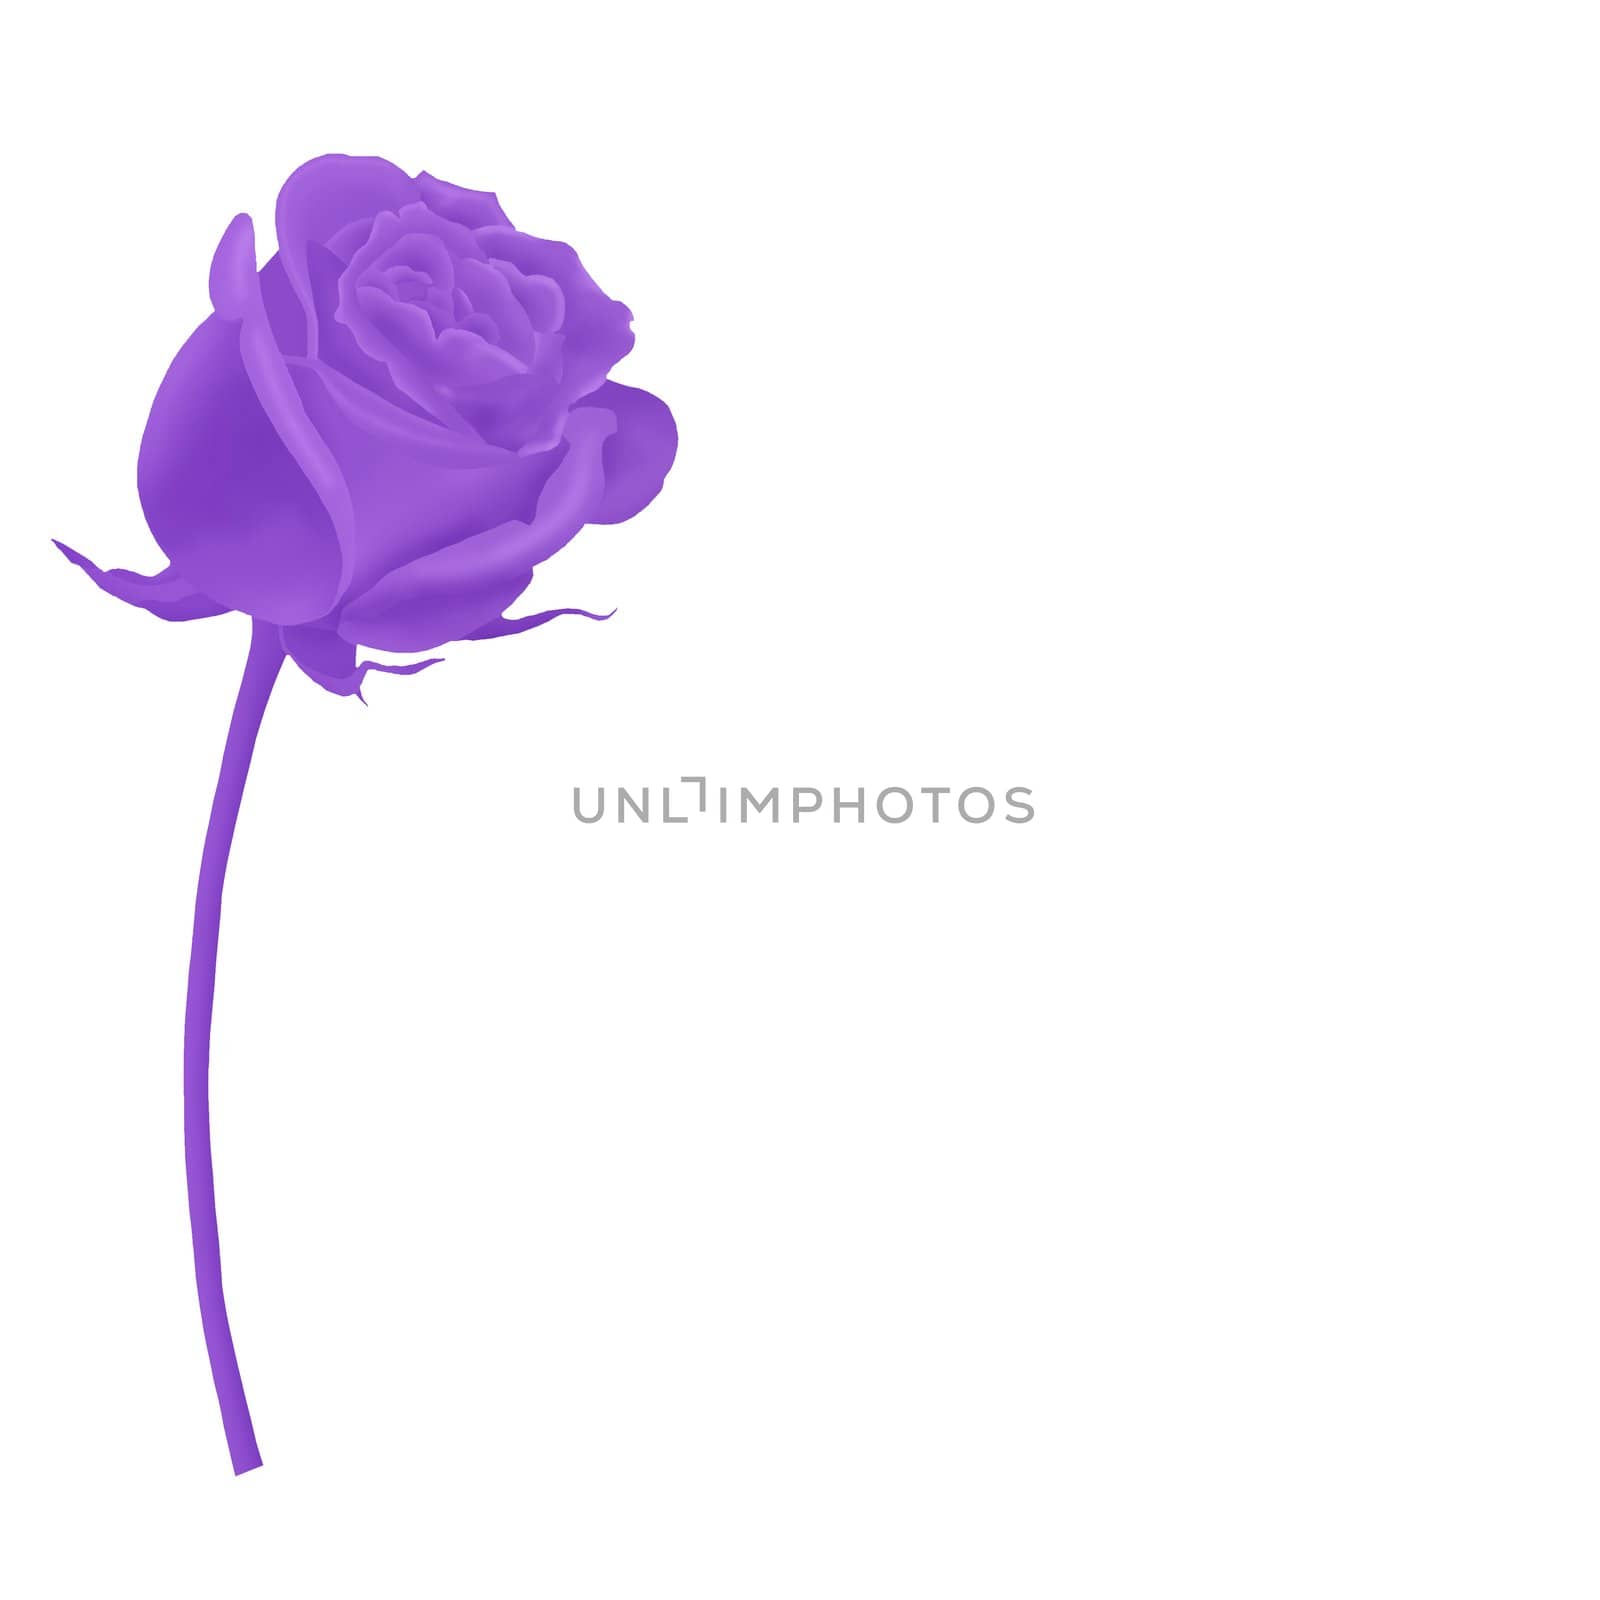 Birthdau card with a single purple rose by acremead